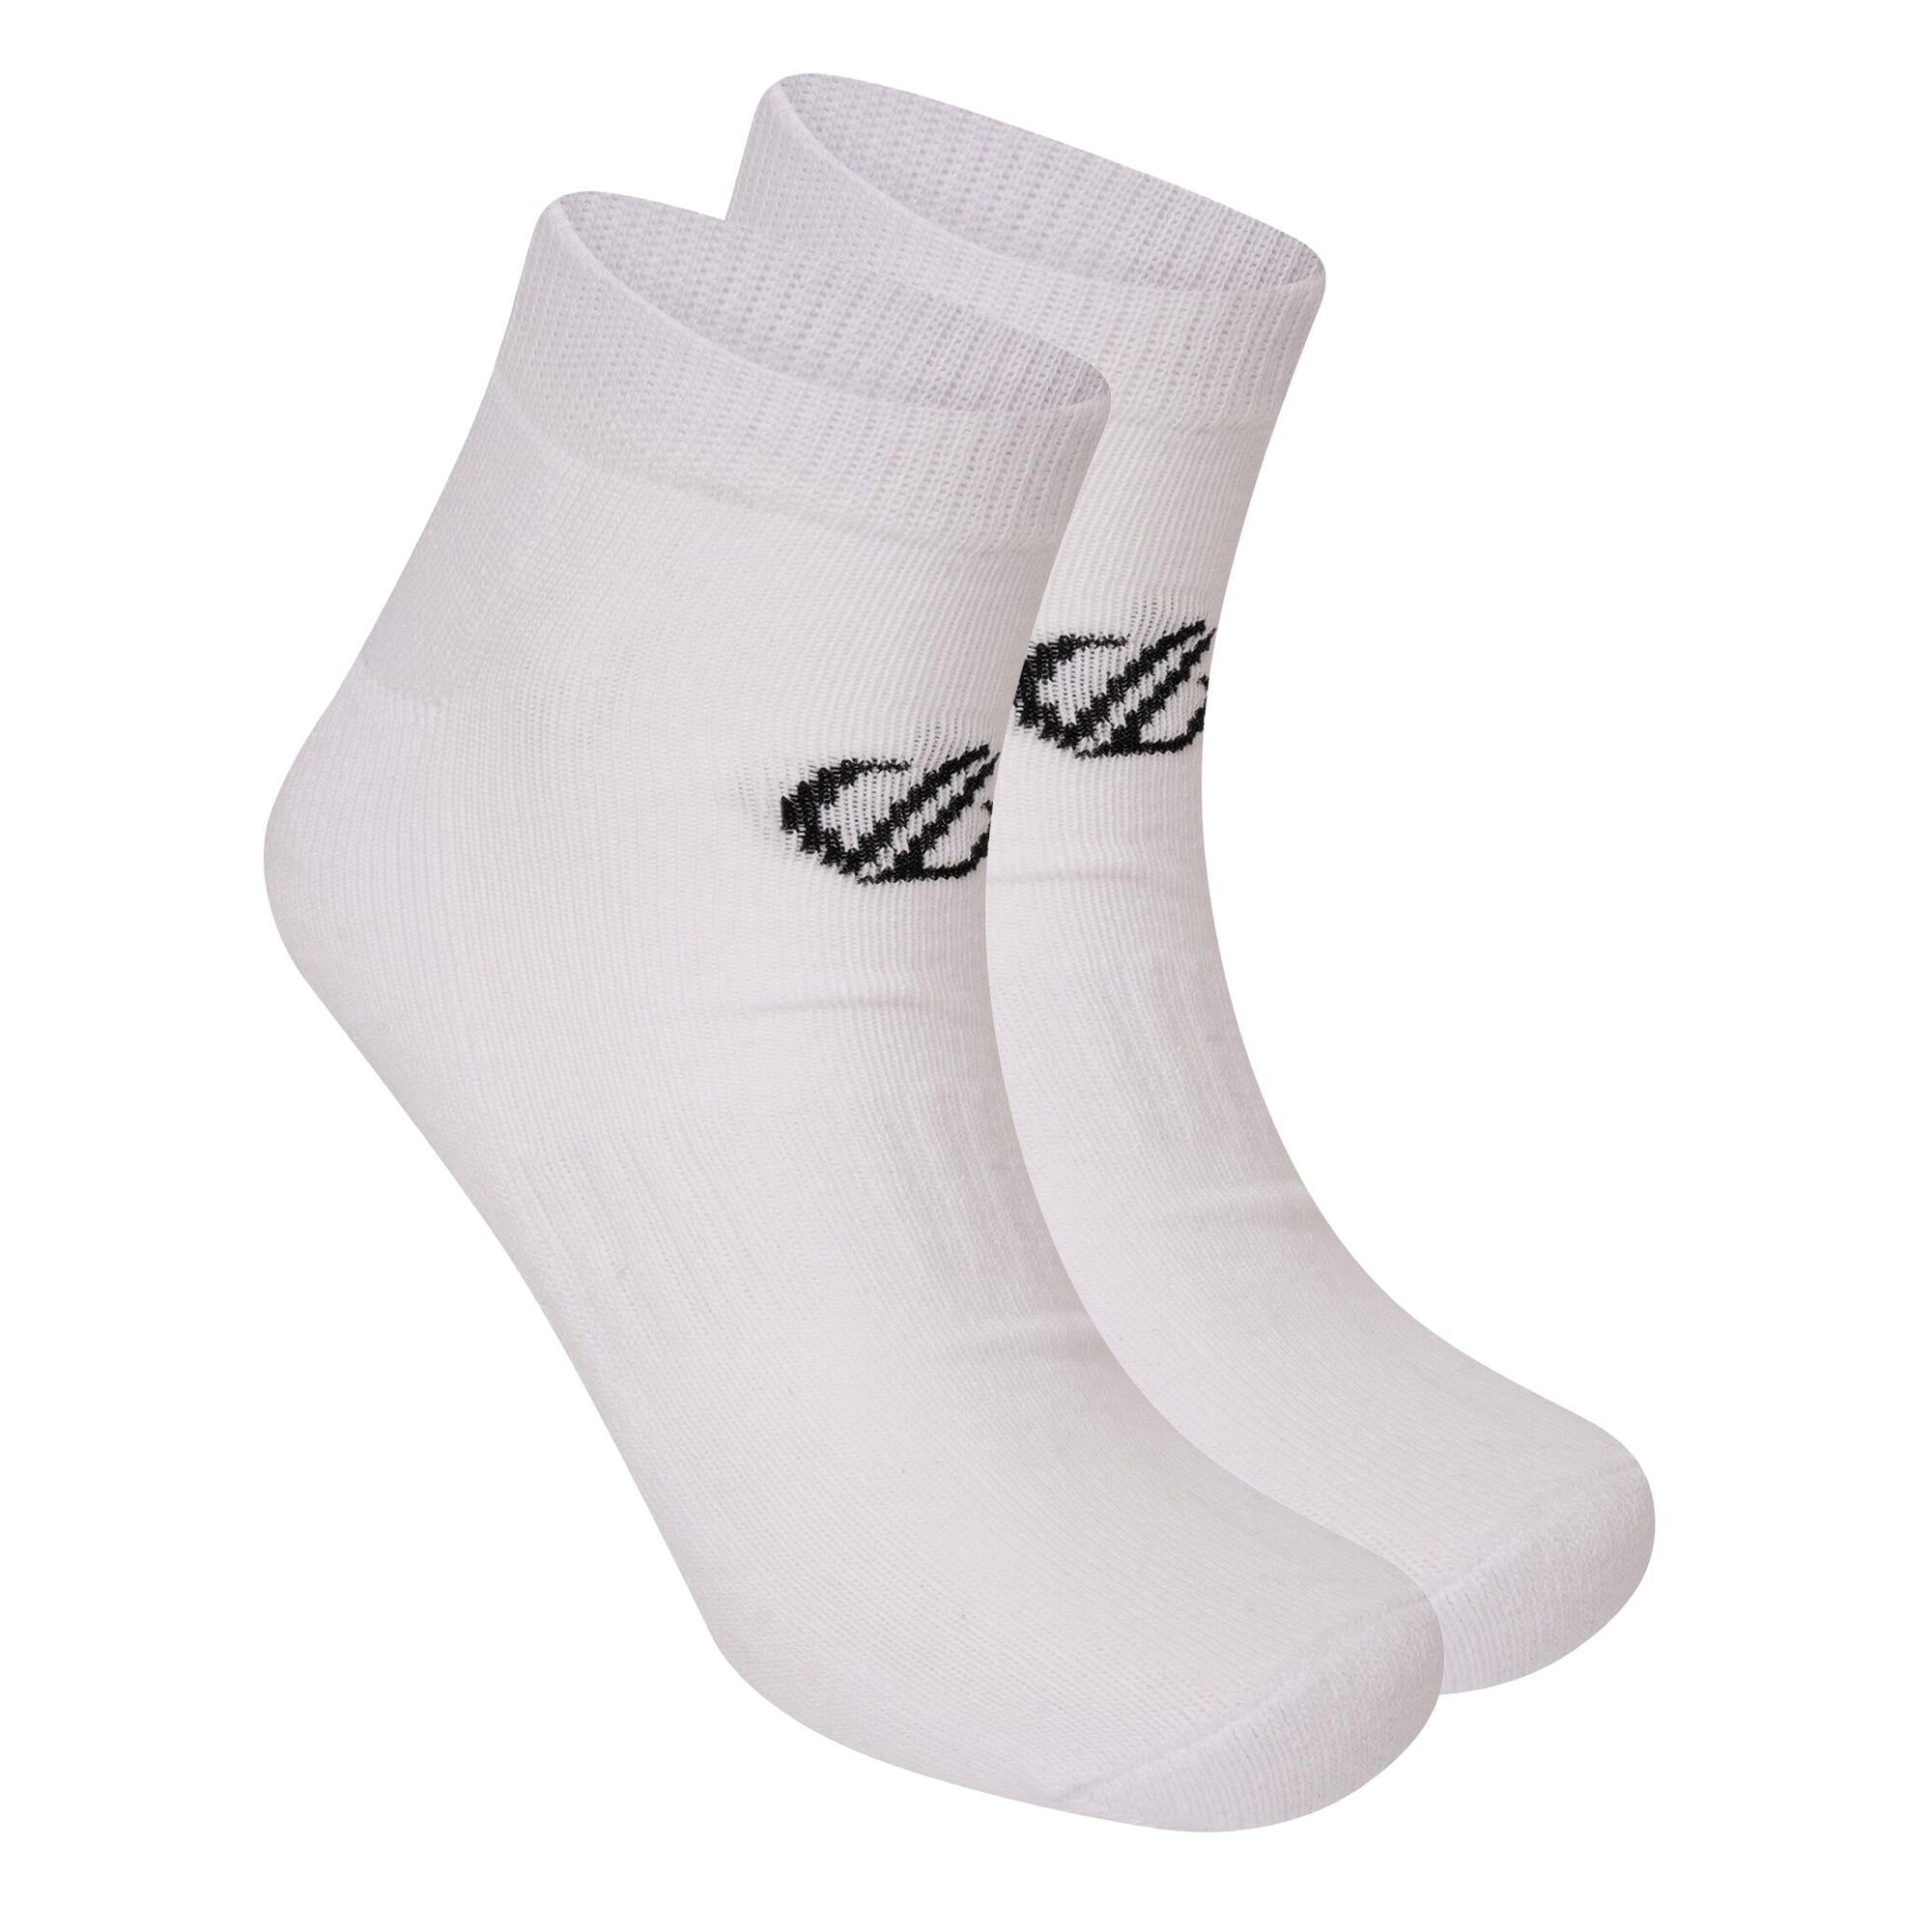 Unisex Adult Essentials Ankle Socks (Pack of 2) (White) 3/4